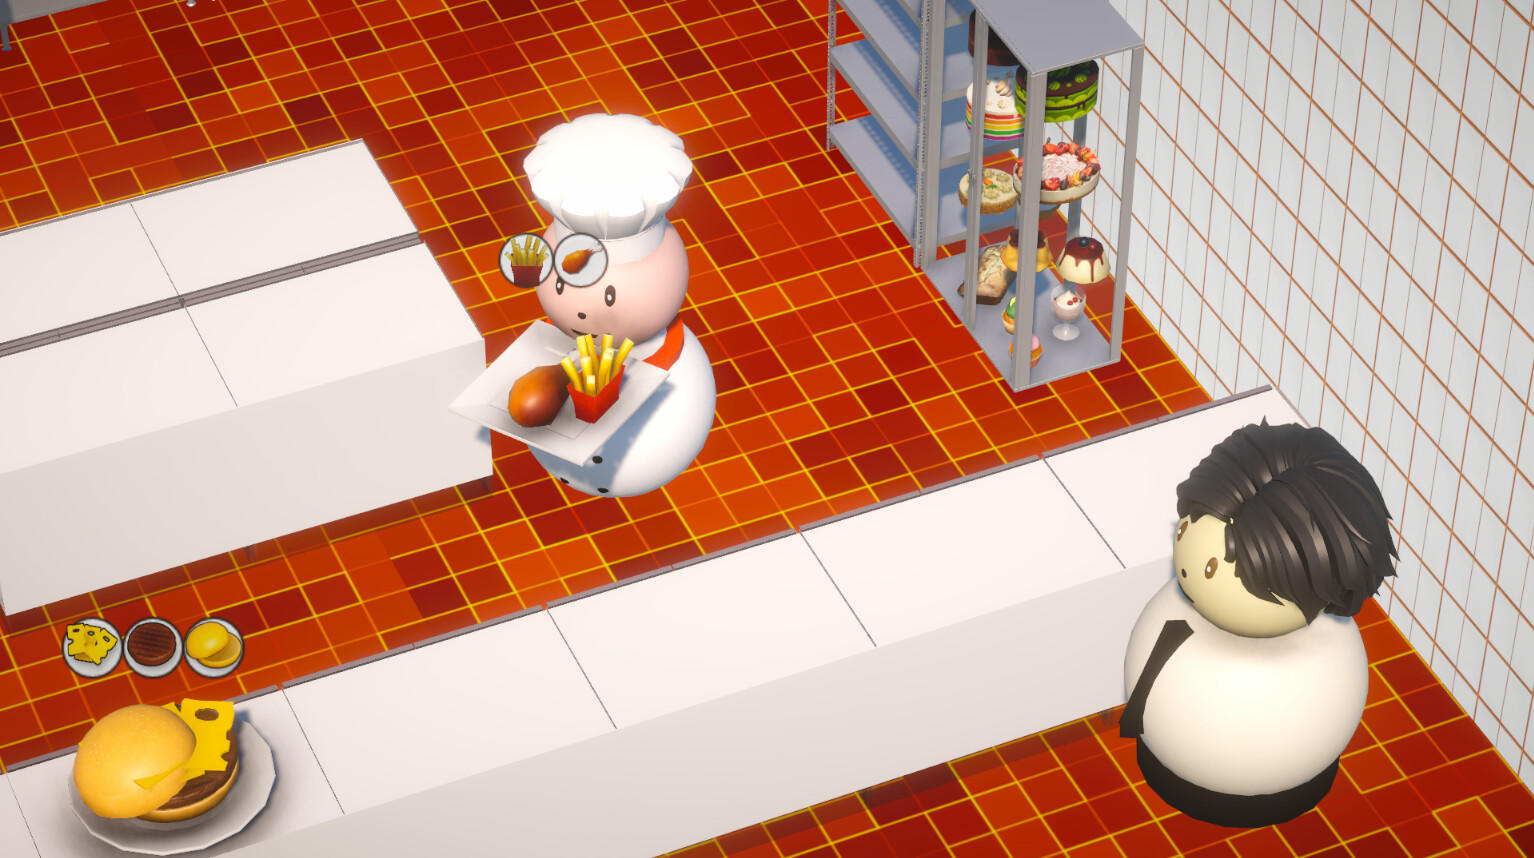 Screenshot of Head Chef